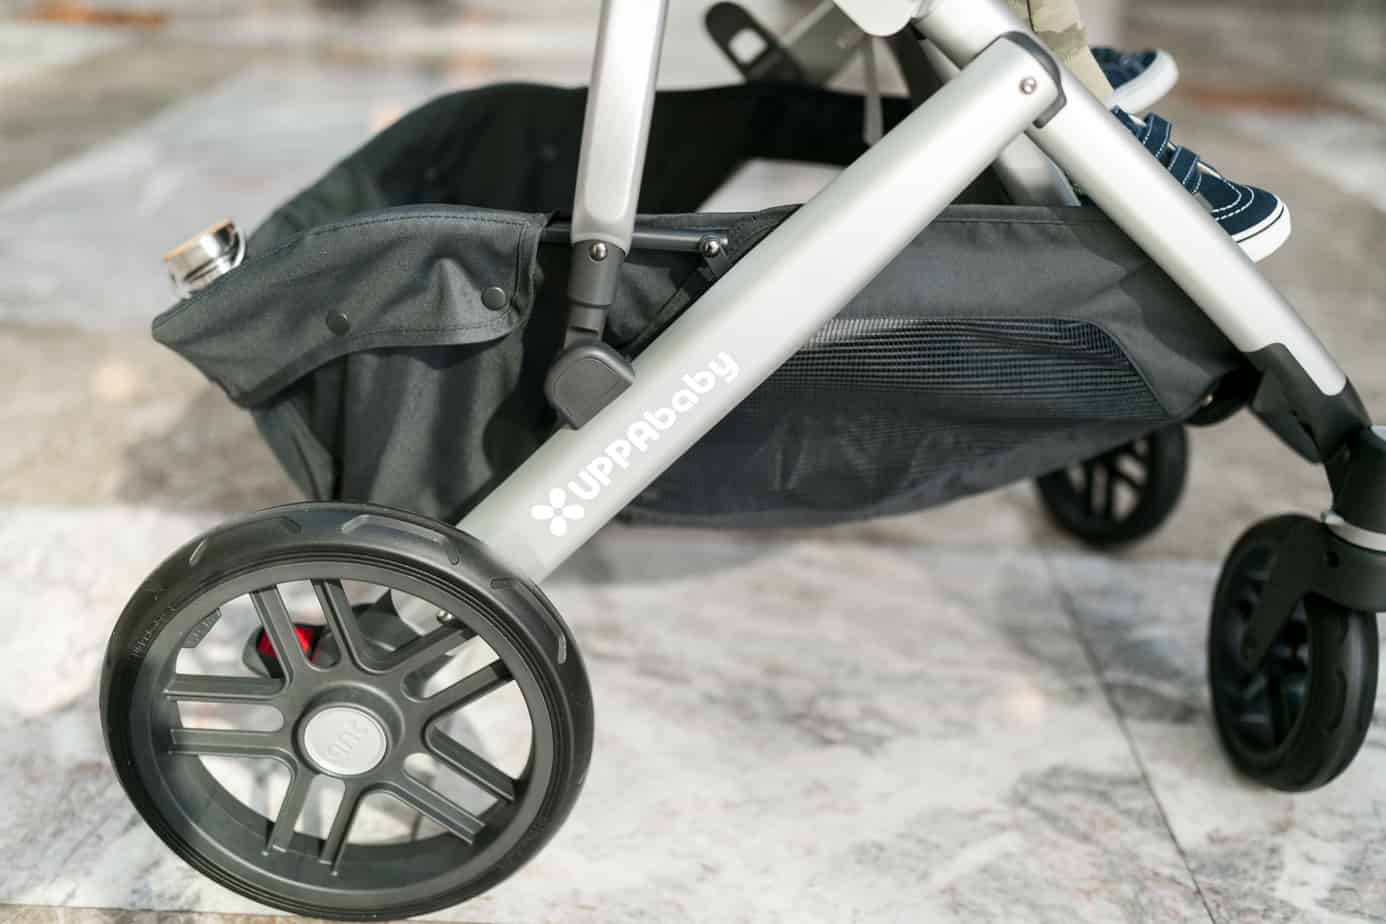 Lower basket of UPPAbaby stroller